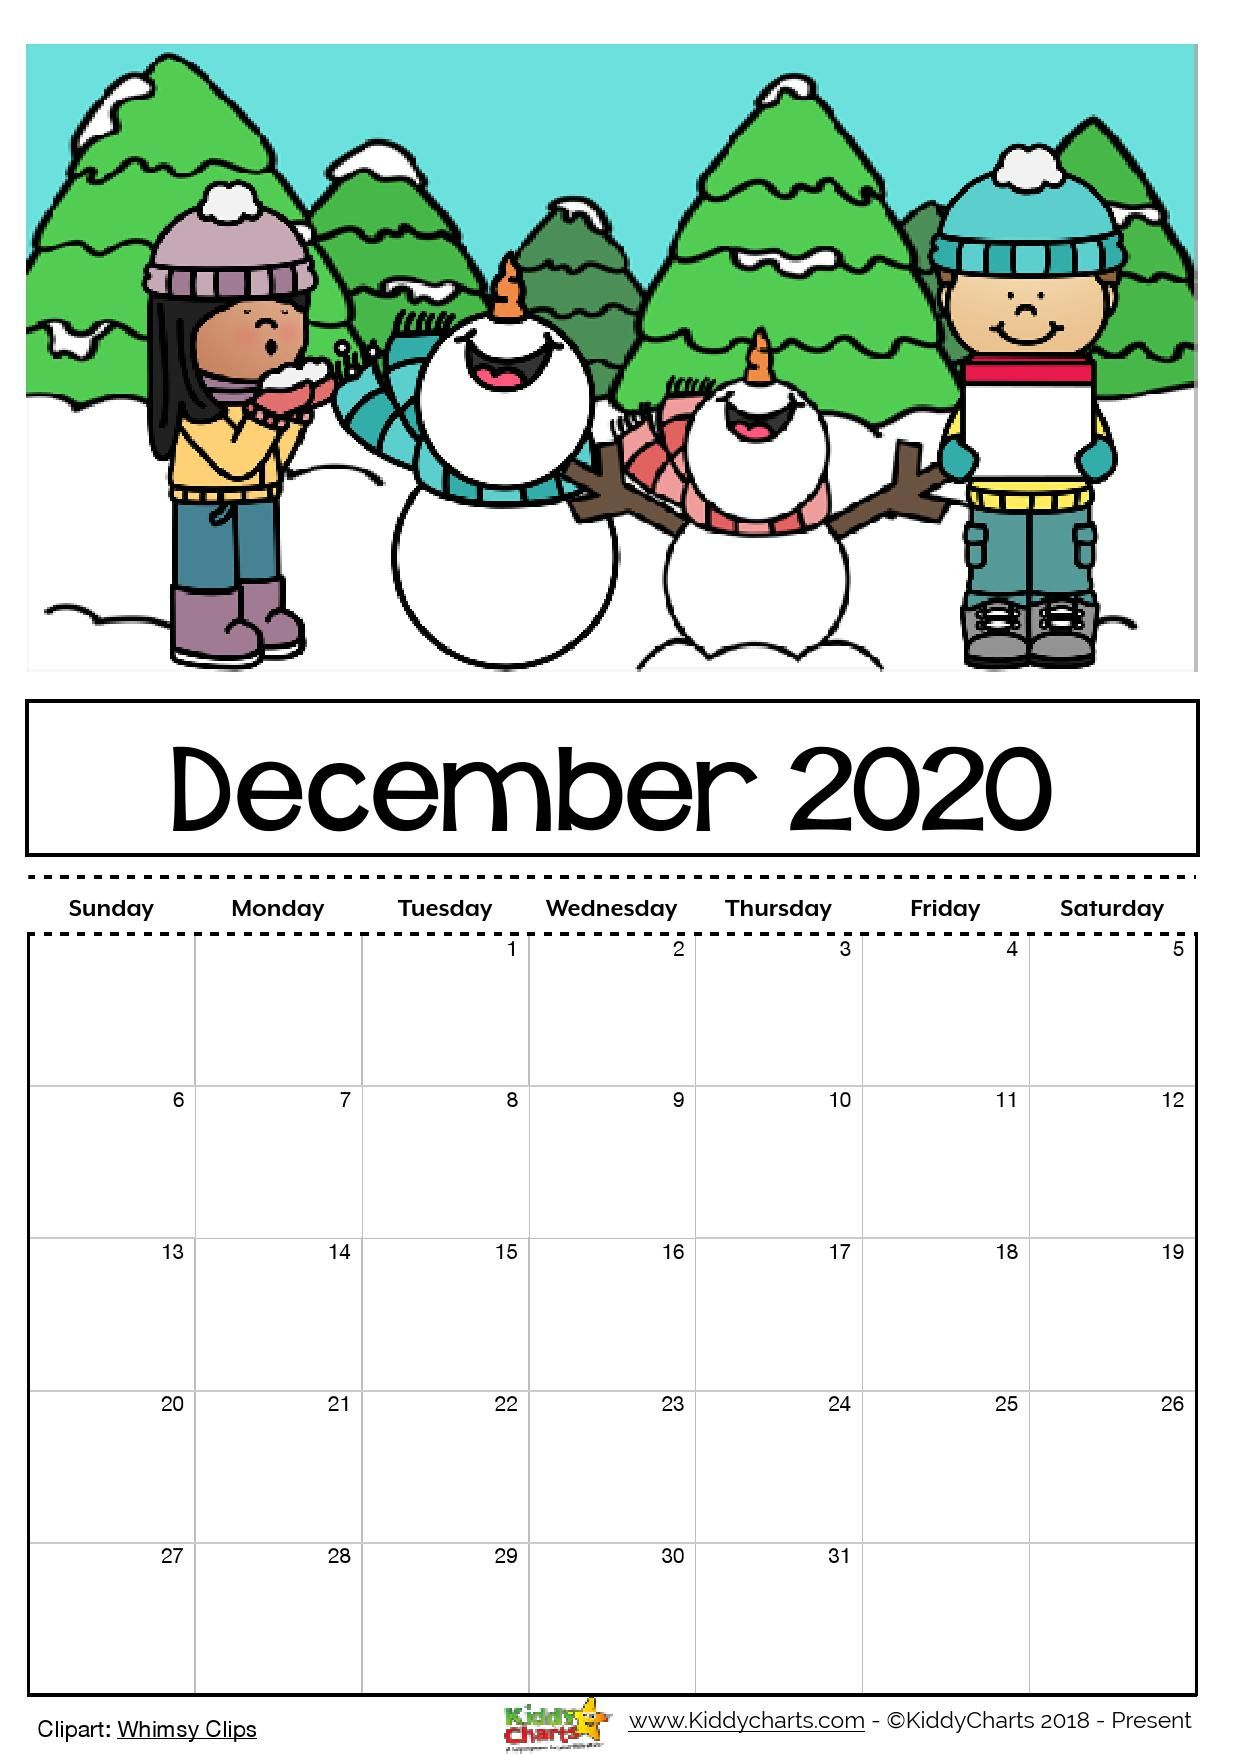 Free Printable Halloween Calendar 2020 | Calendar ...